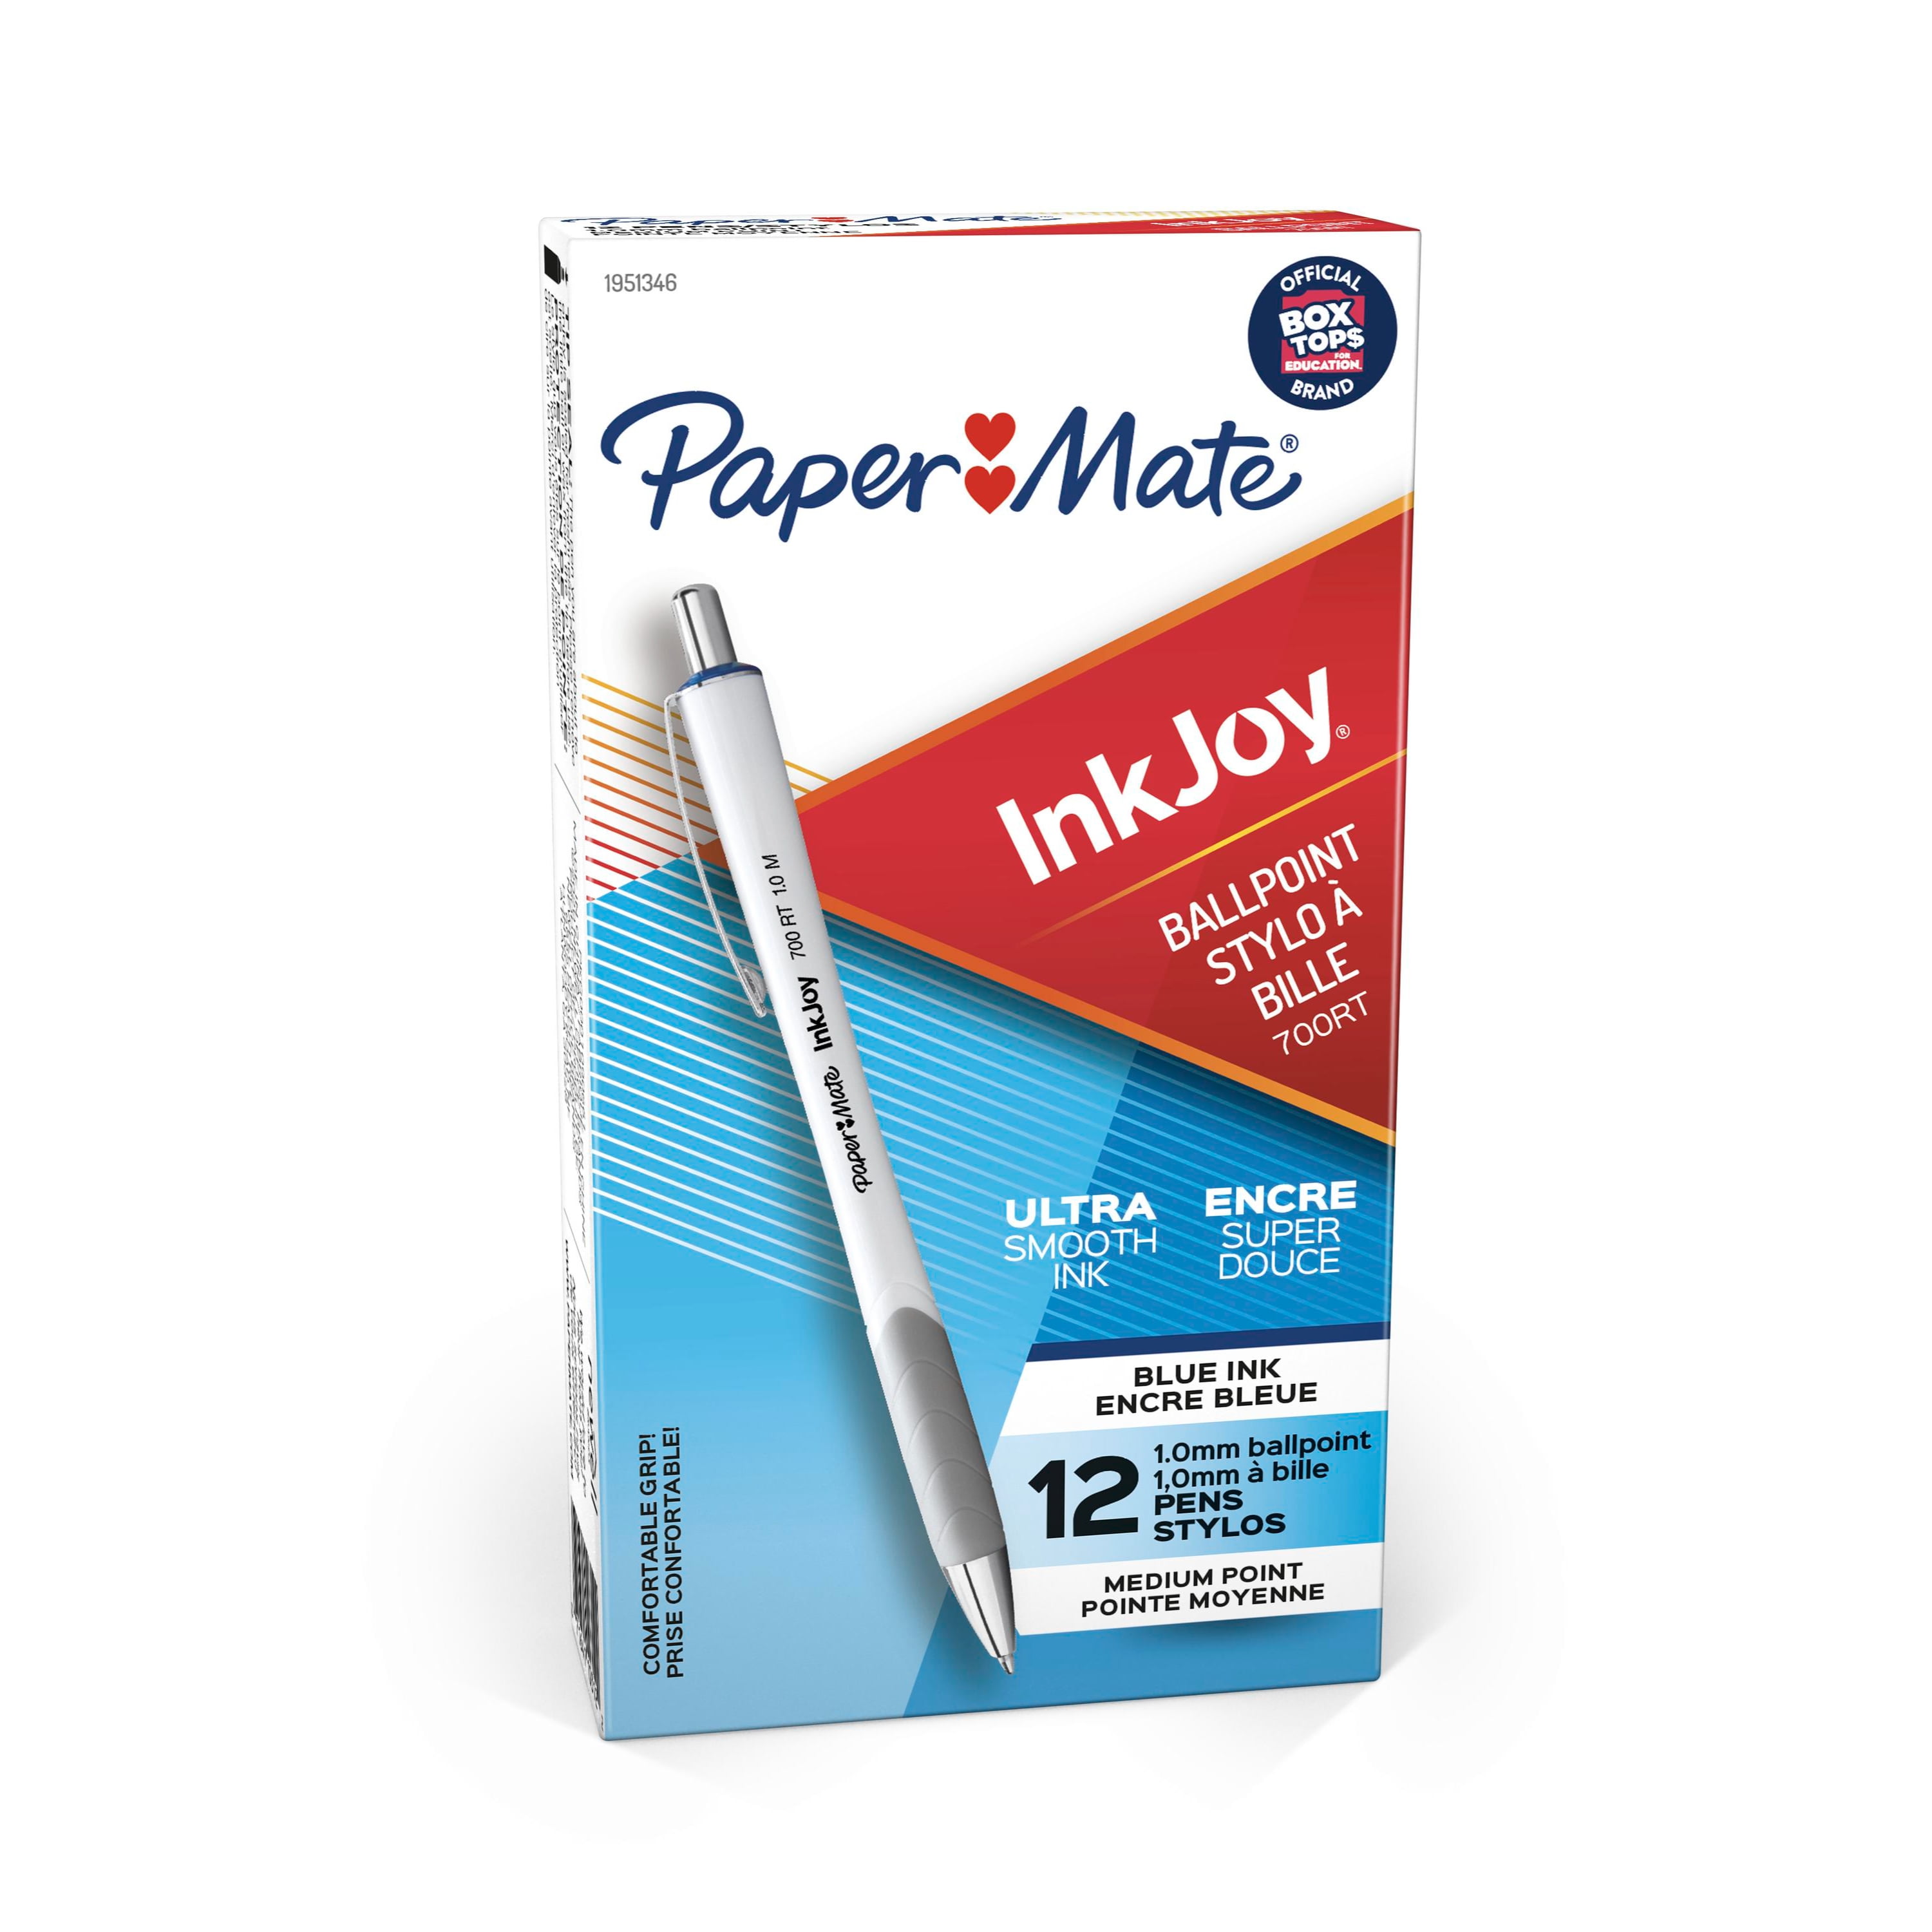 White Barrel, Blue Ink Medium Point Box of 12 InkJoy 700RT Retractable Ballpoint Pens 1951346 - New 